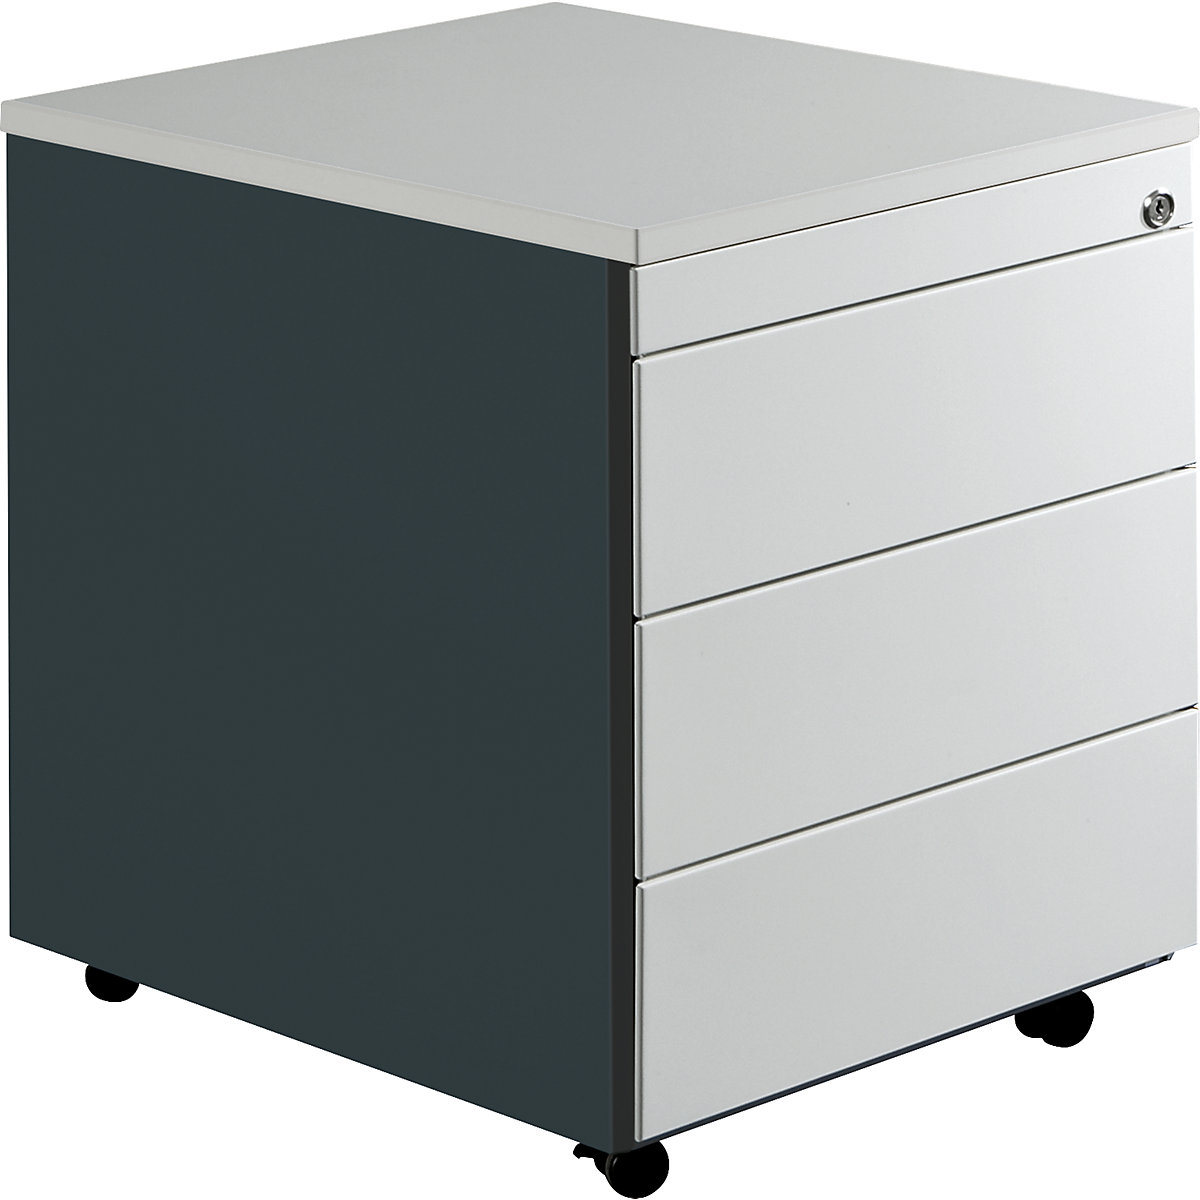 Zásuvkový kontejner s koly – mauser, v x h 579 x 600 mm, plastová deska, 3 zásuvky, antracitově šedá / světle šedá / světle šedá-3